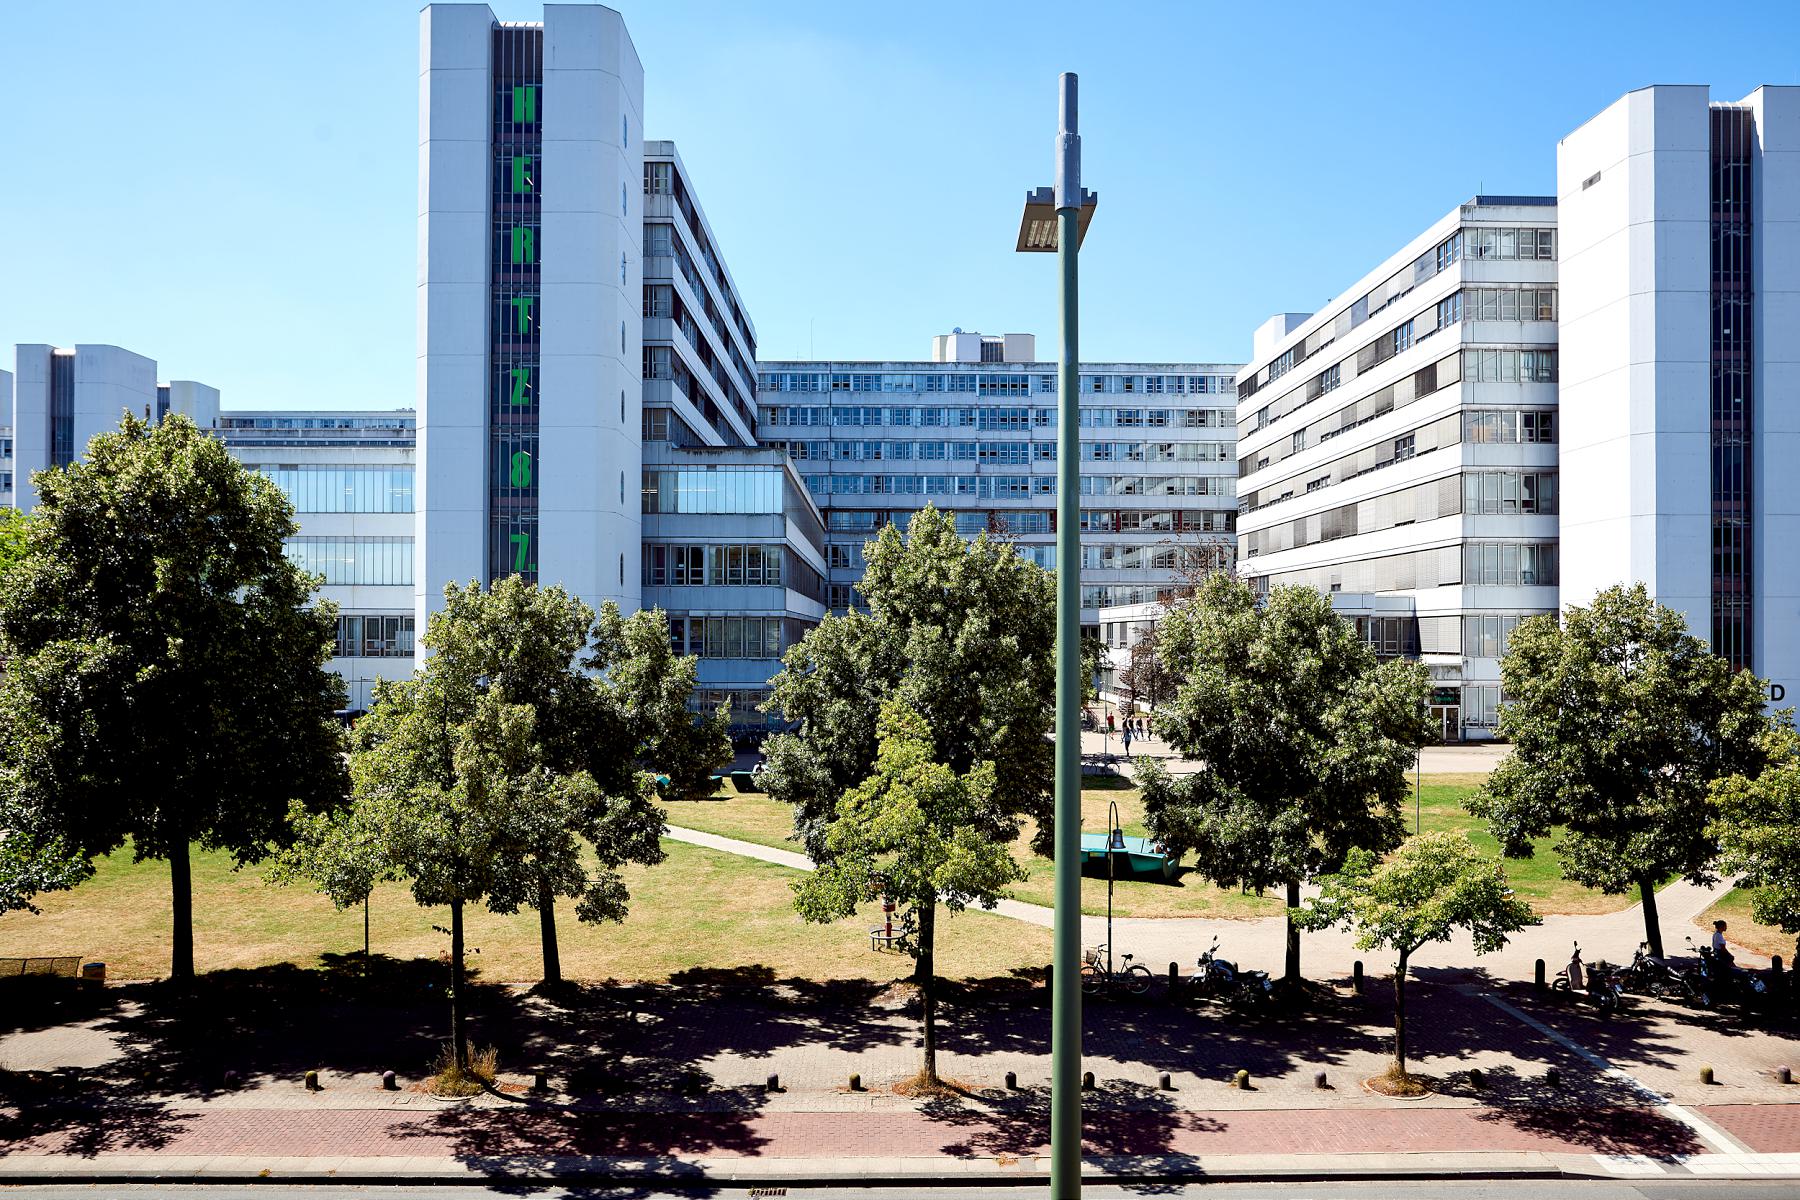 Campus at Bielefeld University